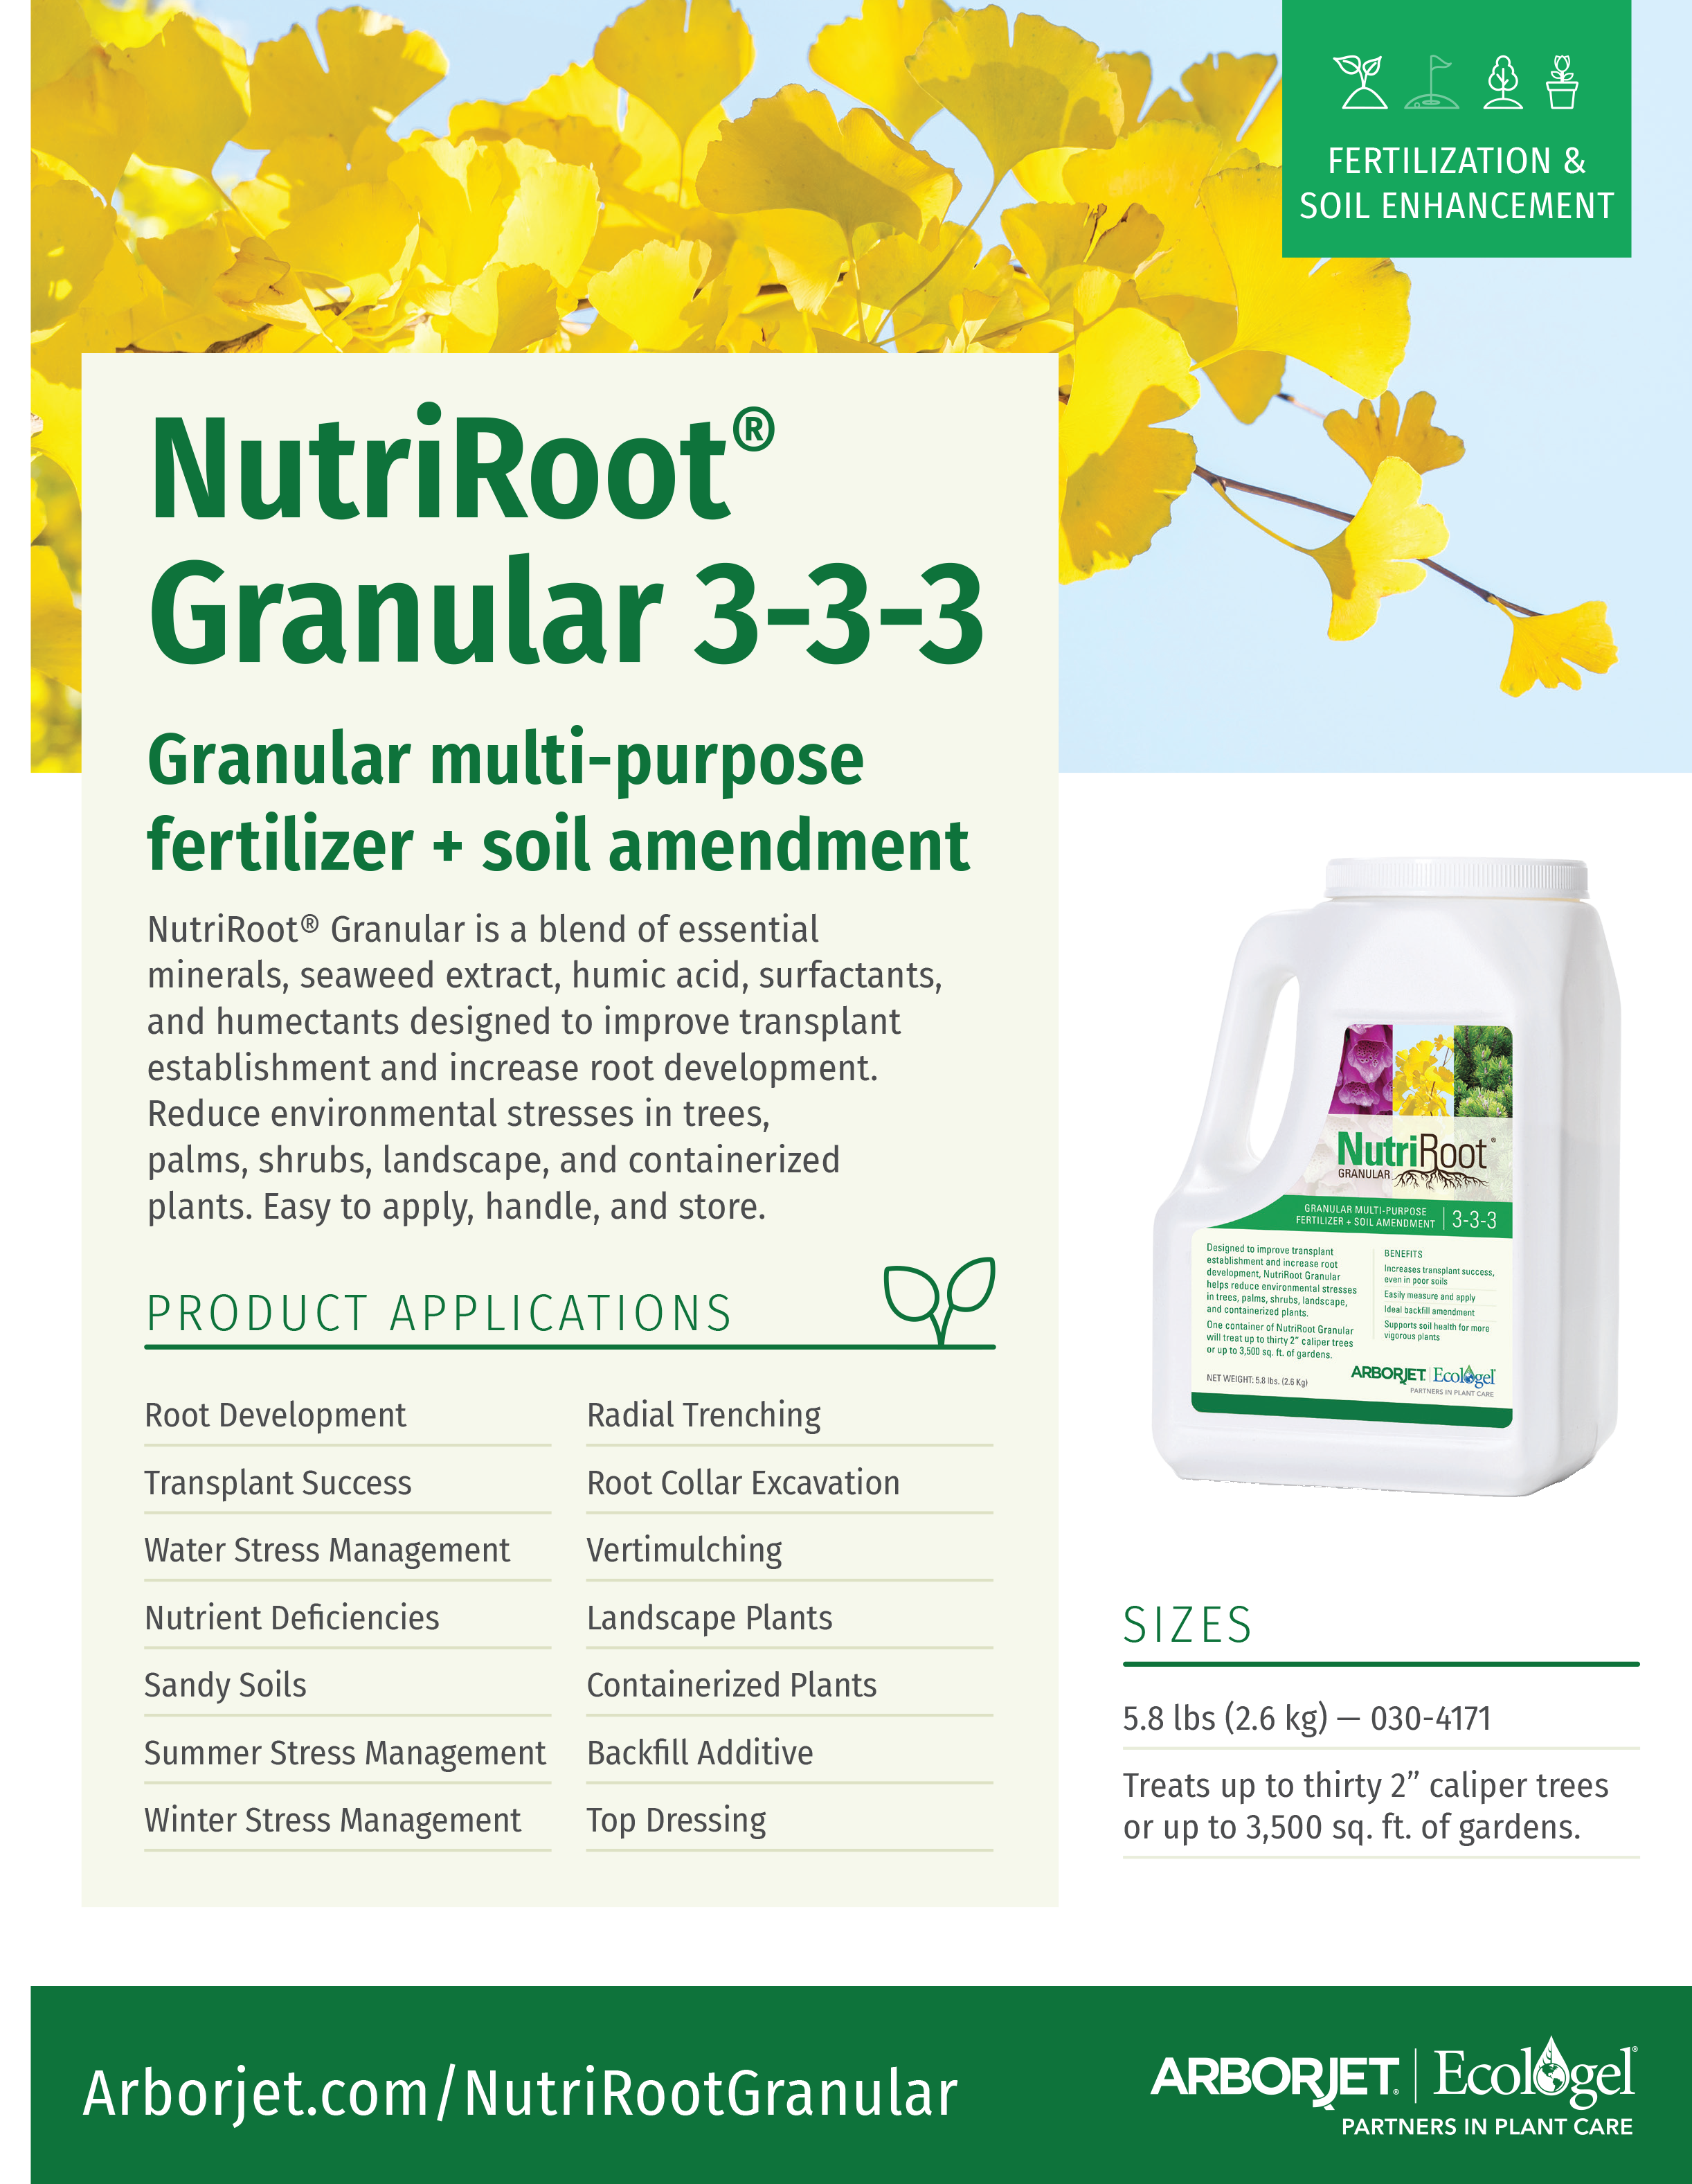 Nutriroot granular 3-3-3 fertilizer applications list and description